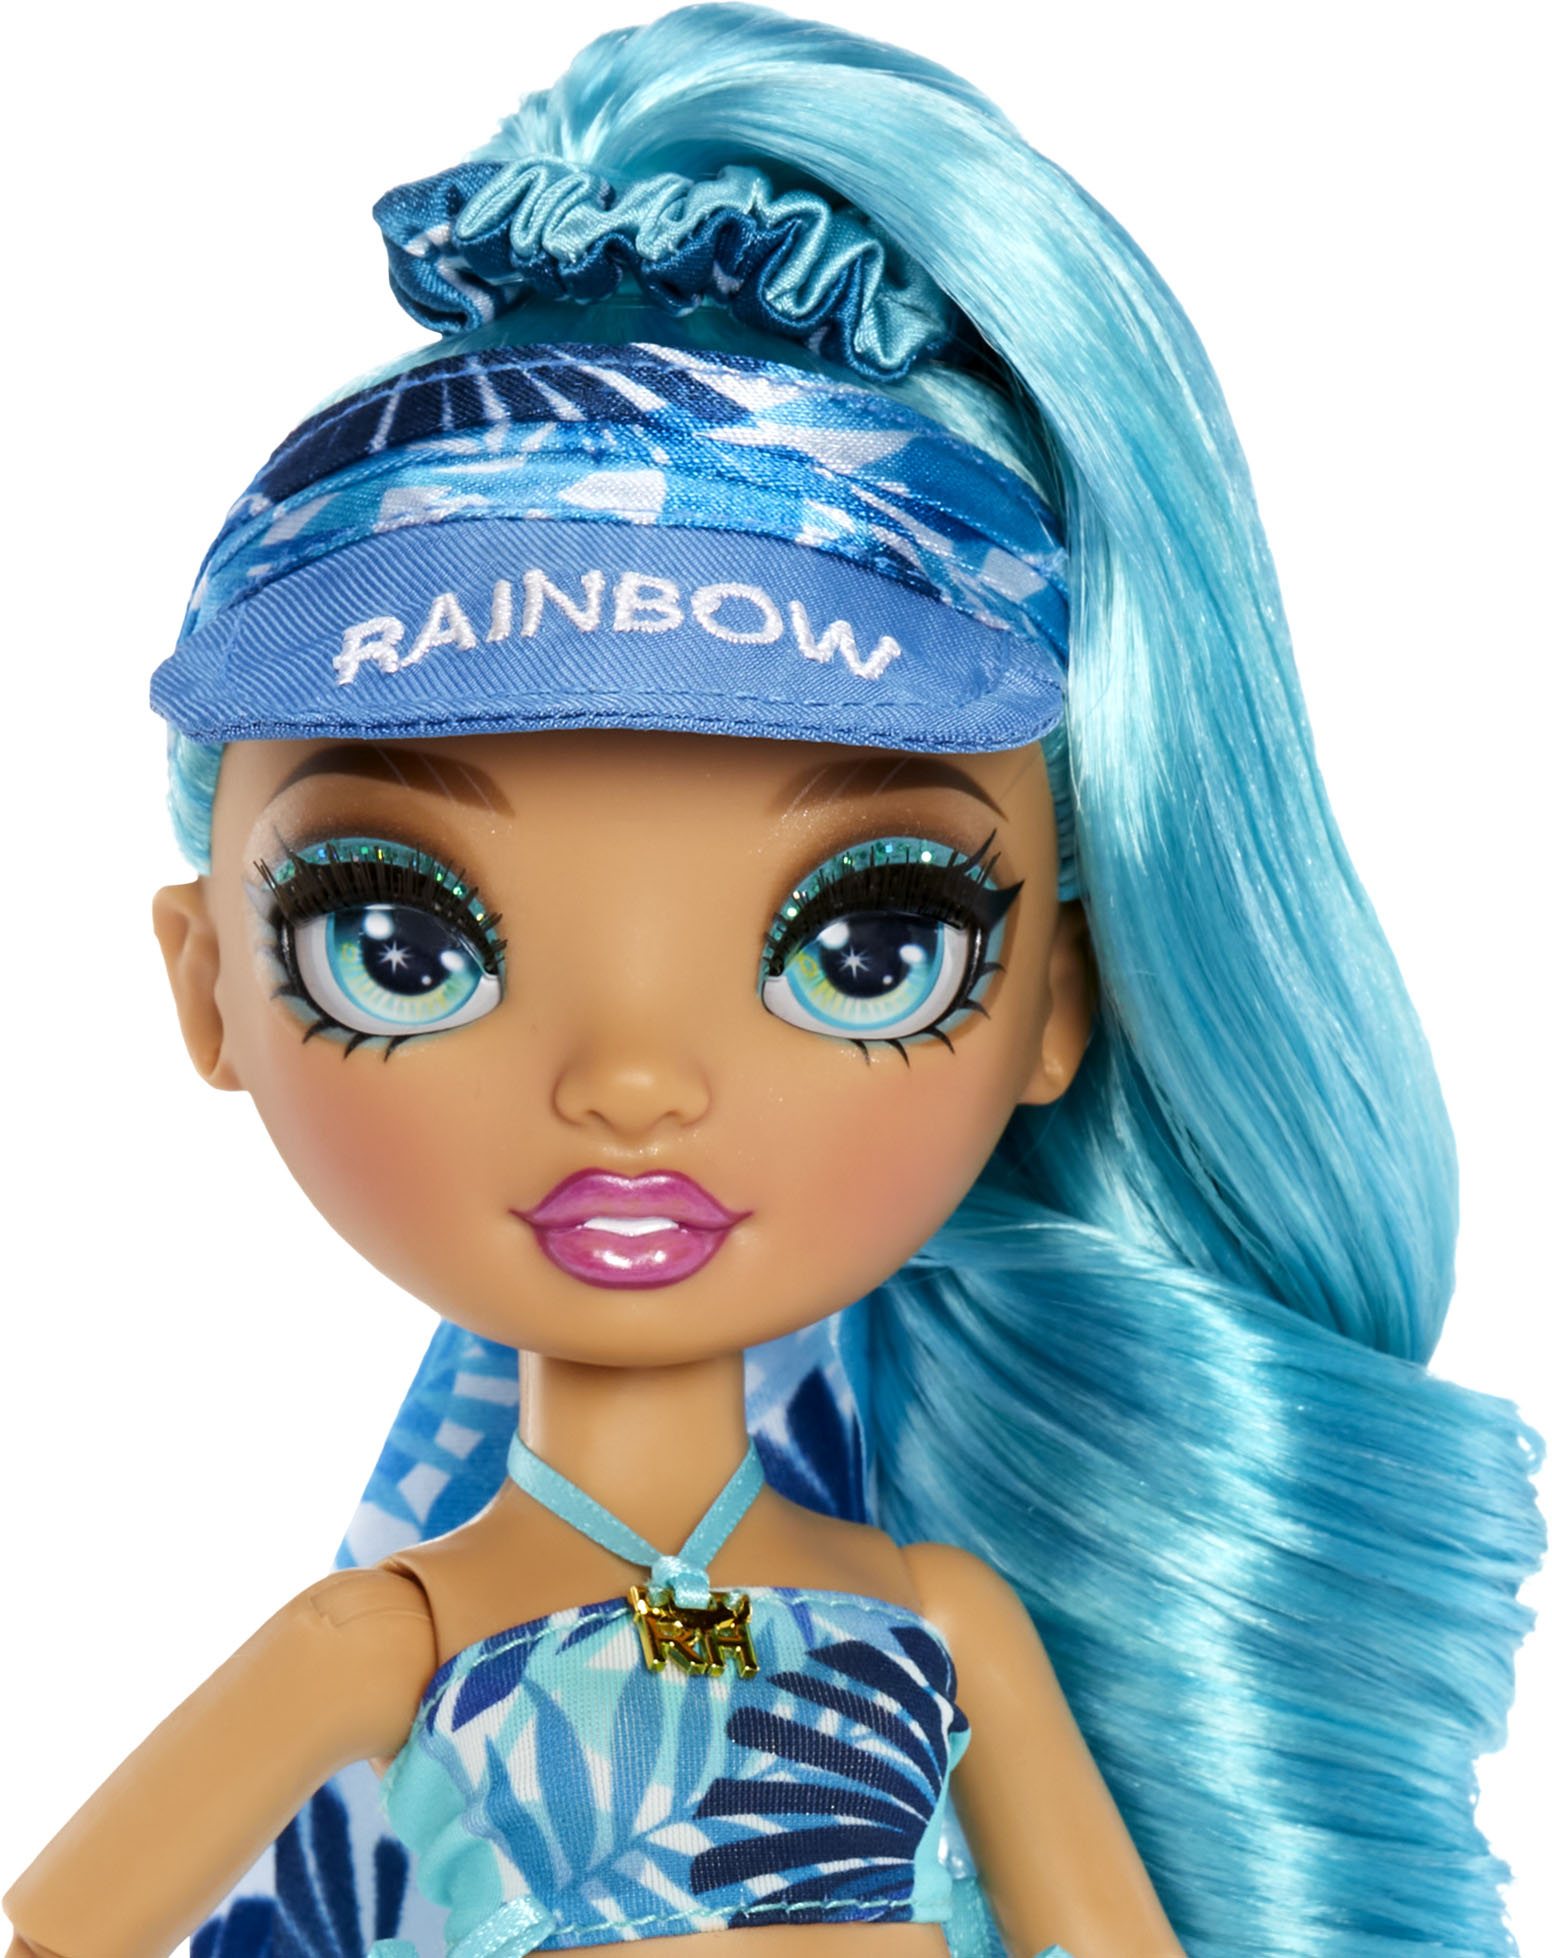 Complete Set of Rainbow High Pacific Coast Dolls- new!